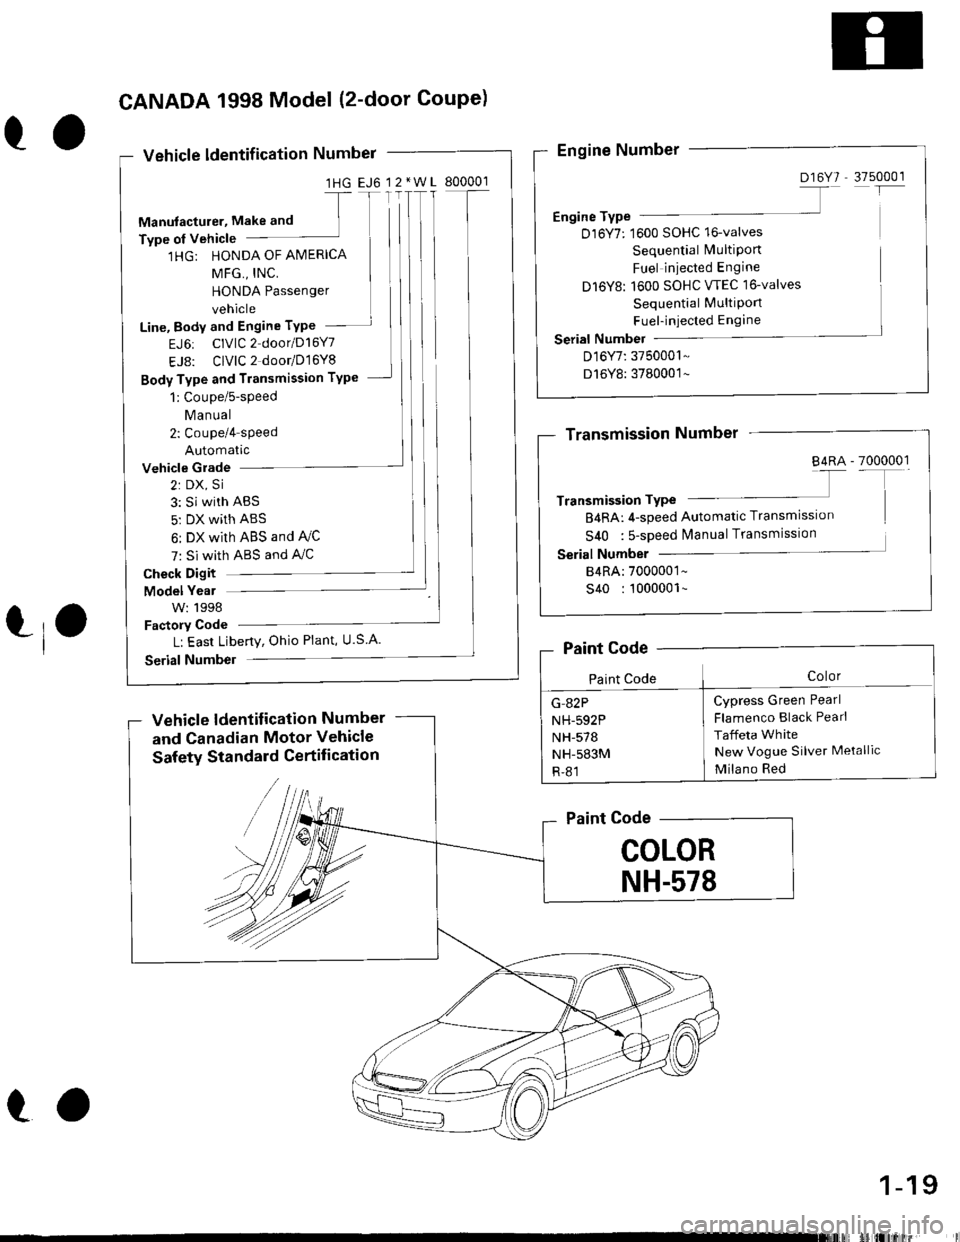 HONDA CIVIC 1998 6.G Workshop Manual Vehicle ldentif ication Numbel
1HG EJ6 12*W
1HG: HONDA OF AMERICA
MFG,, INC,
HONDA Passenger
vehicle
Line, Body and Engine TYPe
EJ6: CIVIC 2 door/D16Y7
EJ8: CIVIC 2 dootD16Y8
Body Type and Transmissio